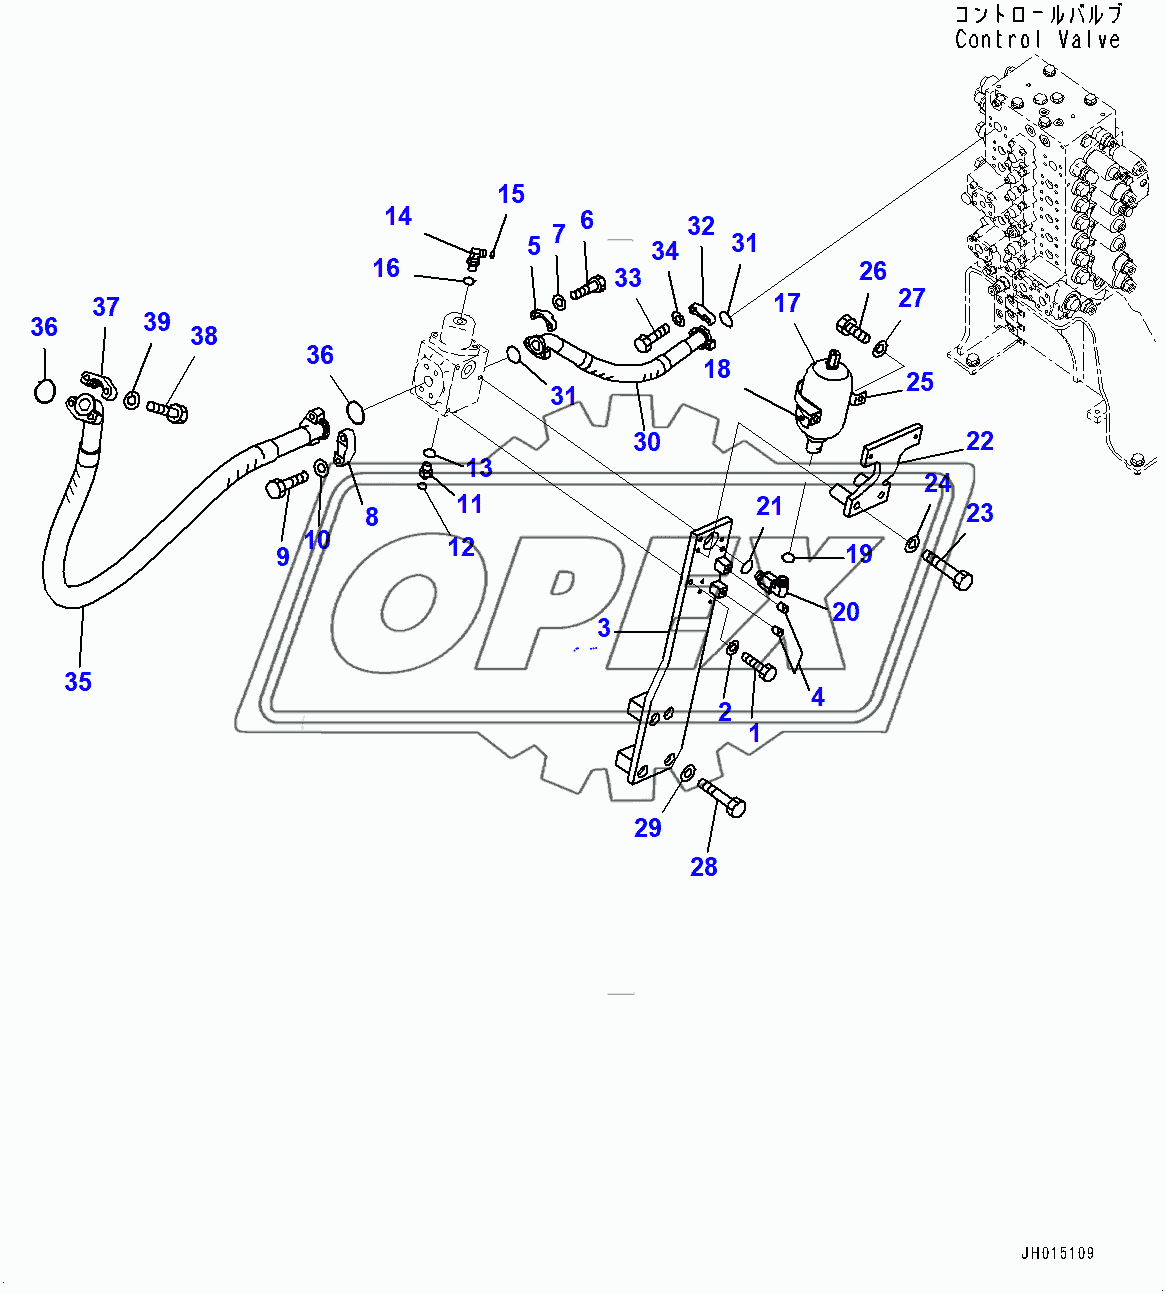  Actuator Piping, Main Piping, R.H. (400073-) 1